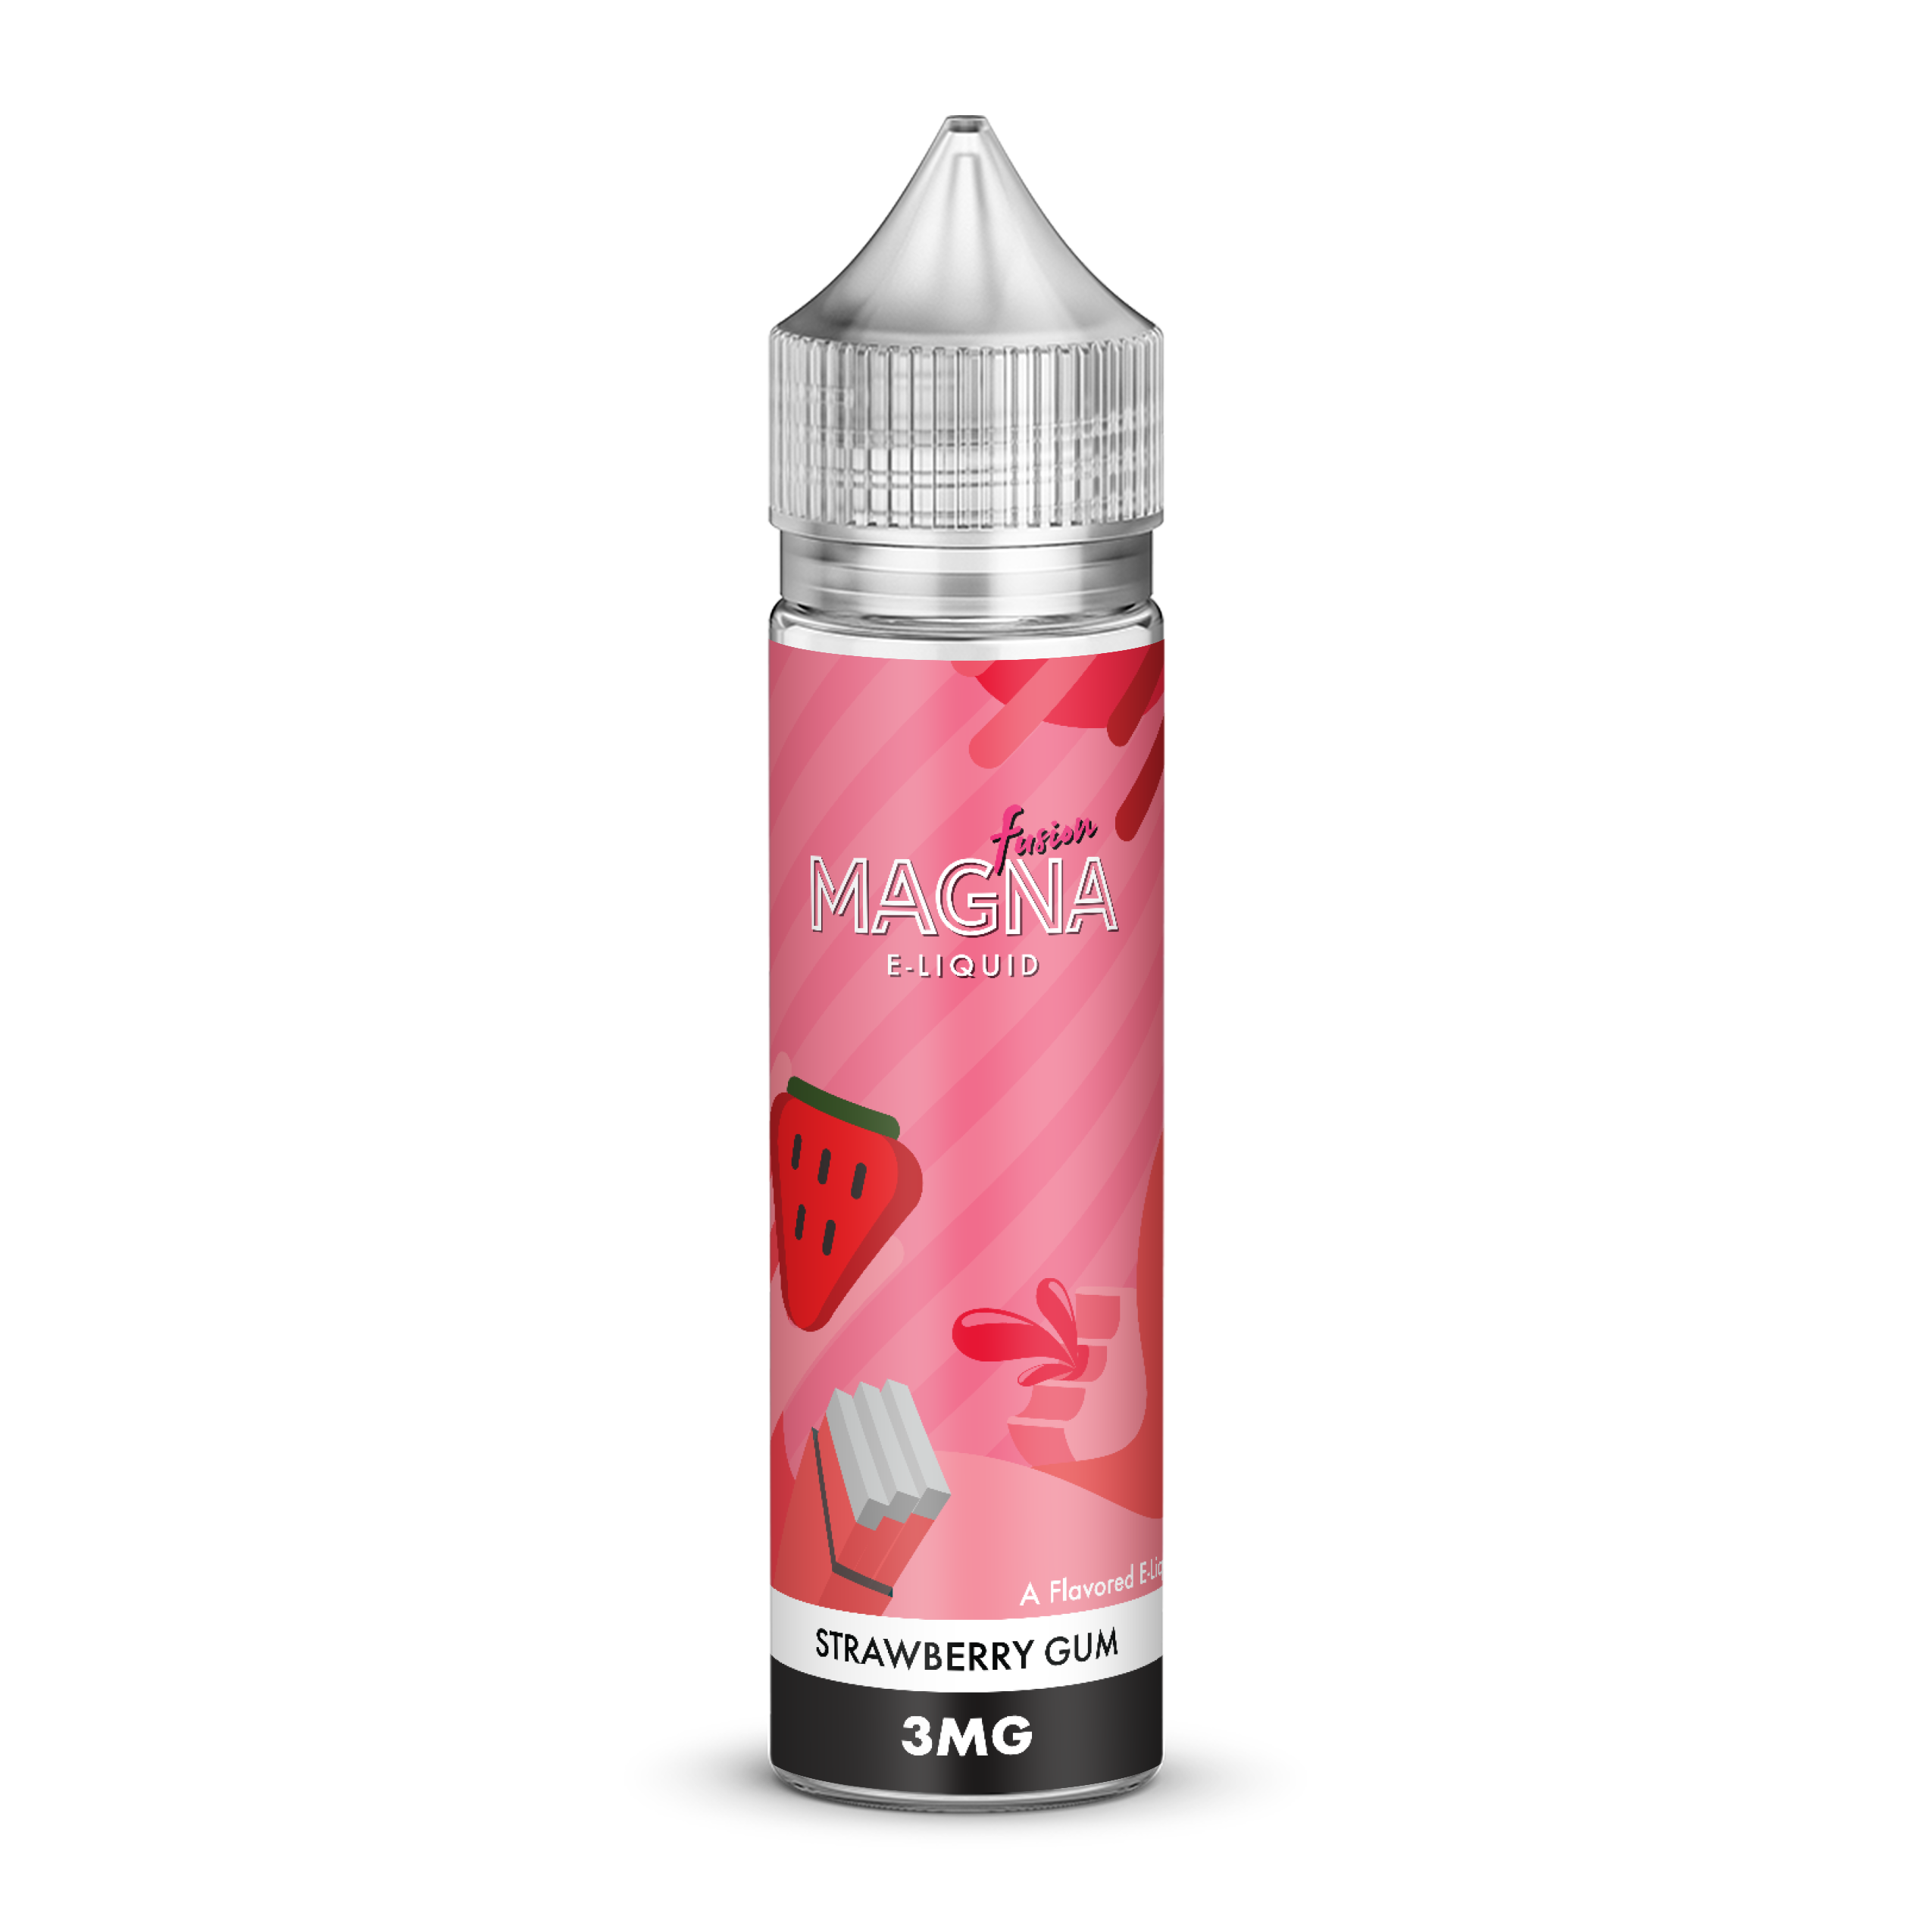 00_magna-bottle_fusion_strawberry-gum